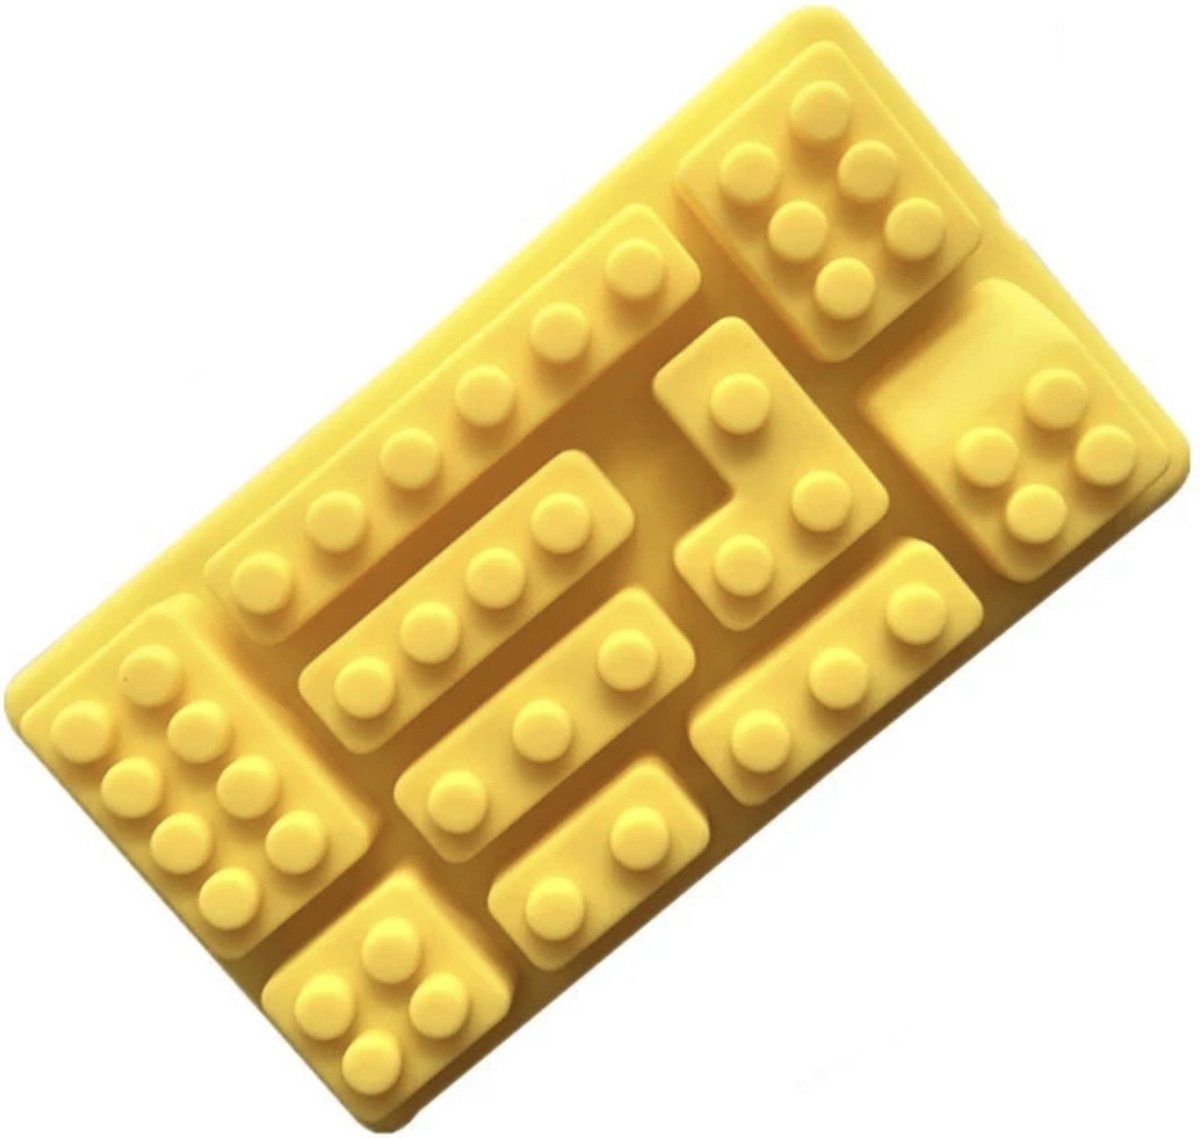 3 Pack - Siliconen mal snoep/chocolade/ijsblokken - Lego blokmannetjes minifiguren - Lego blokjes